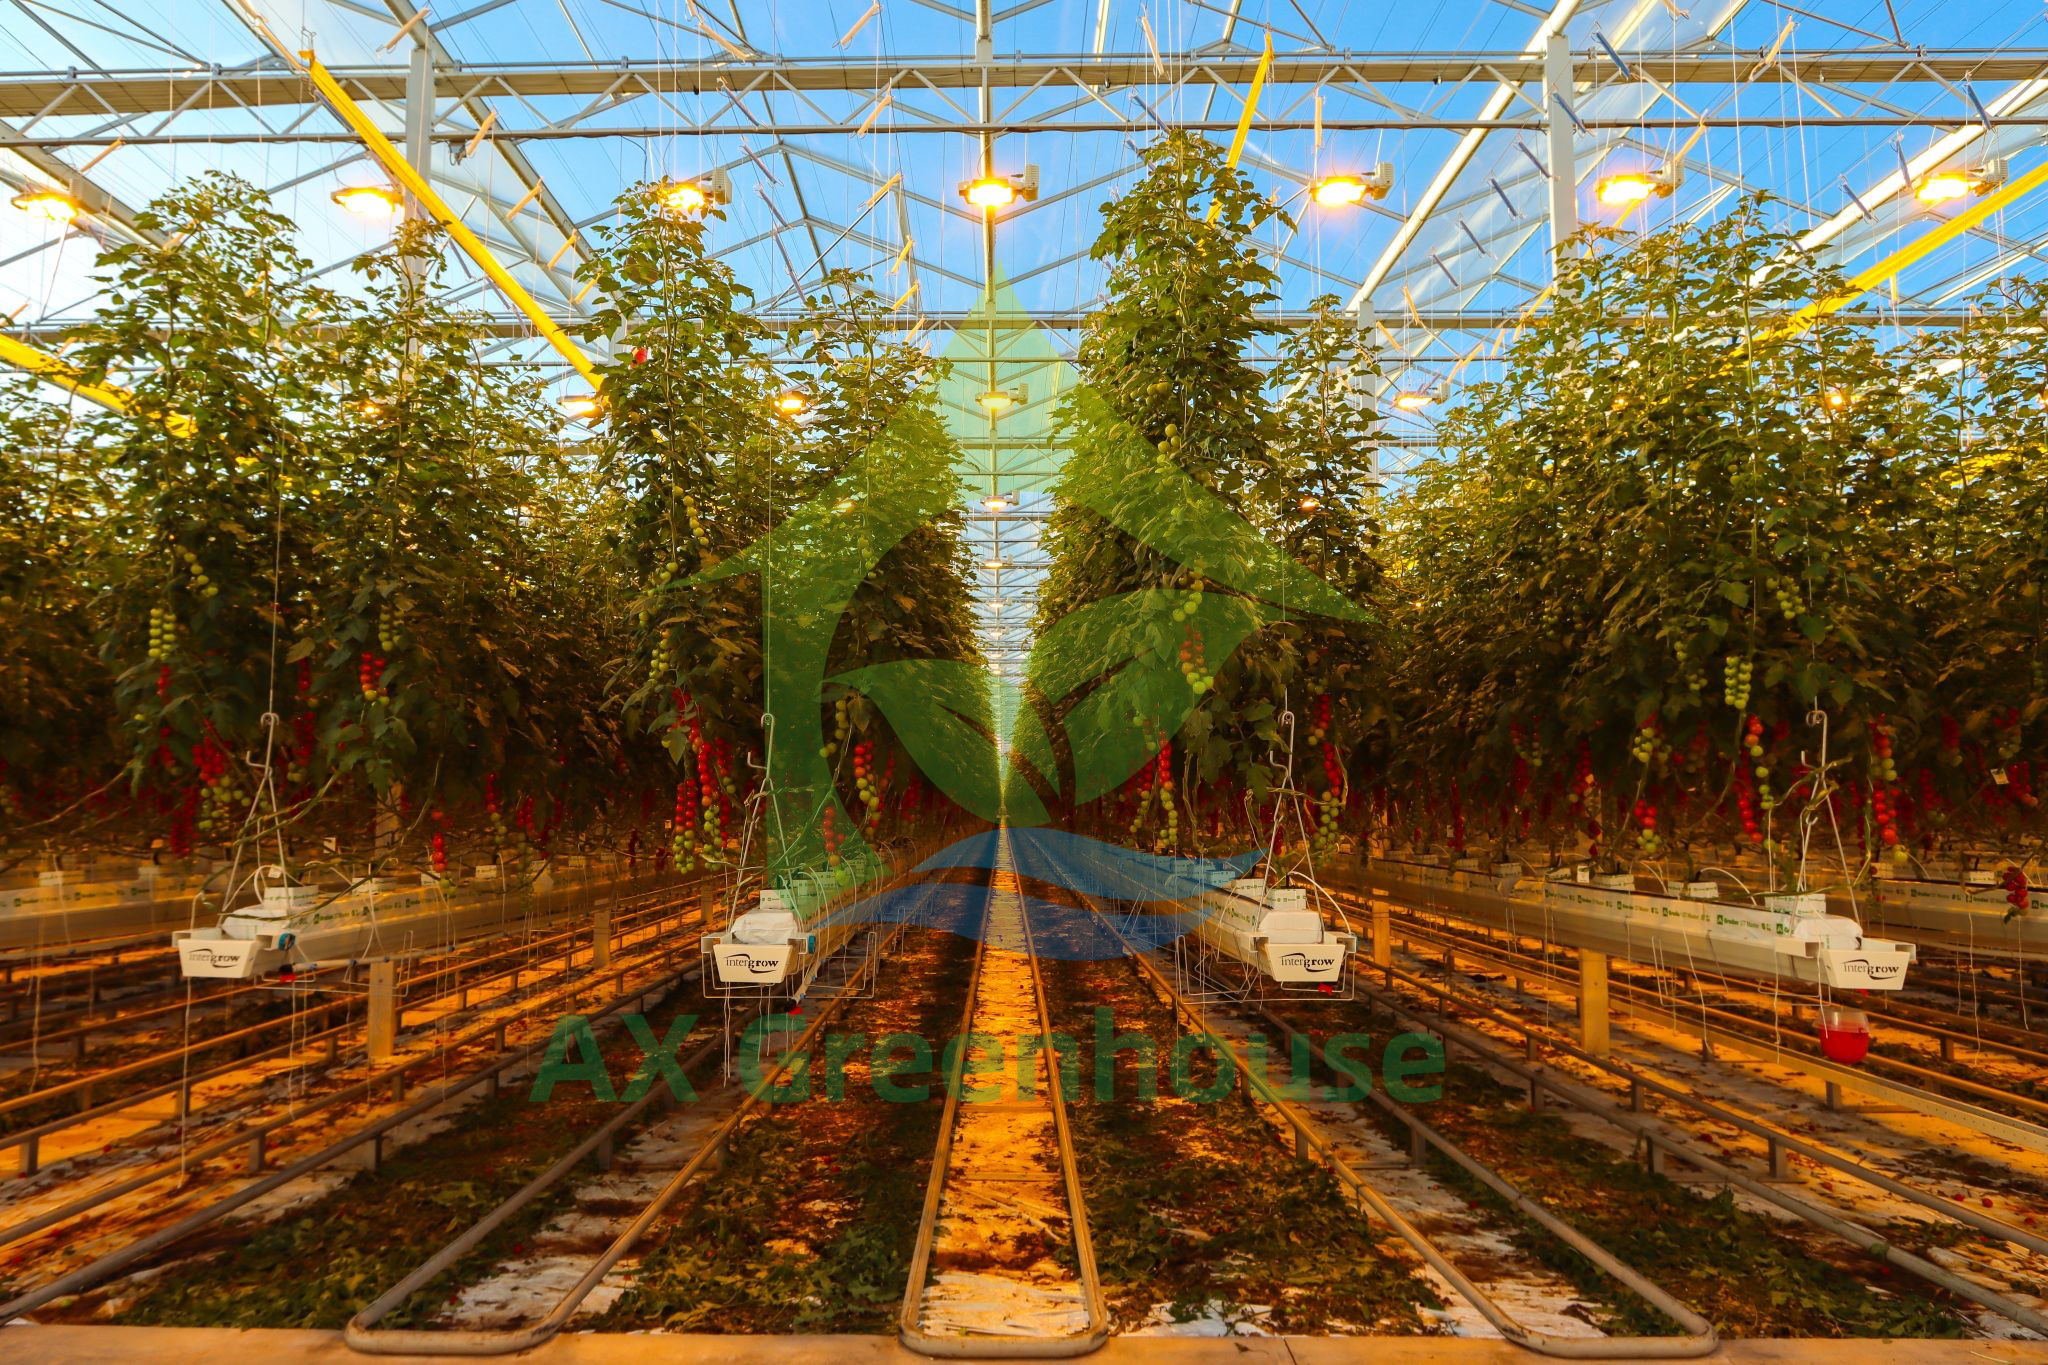 Commercial multi-span tomato greenhouse